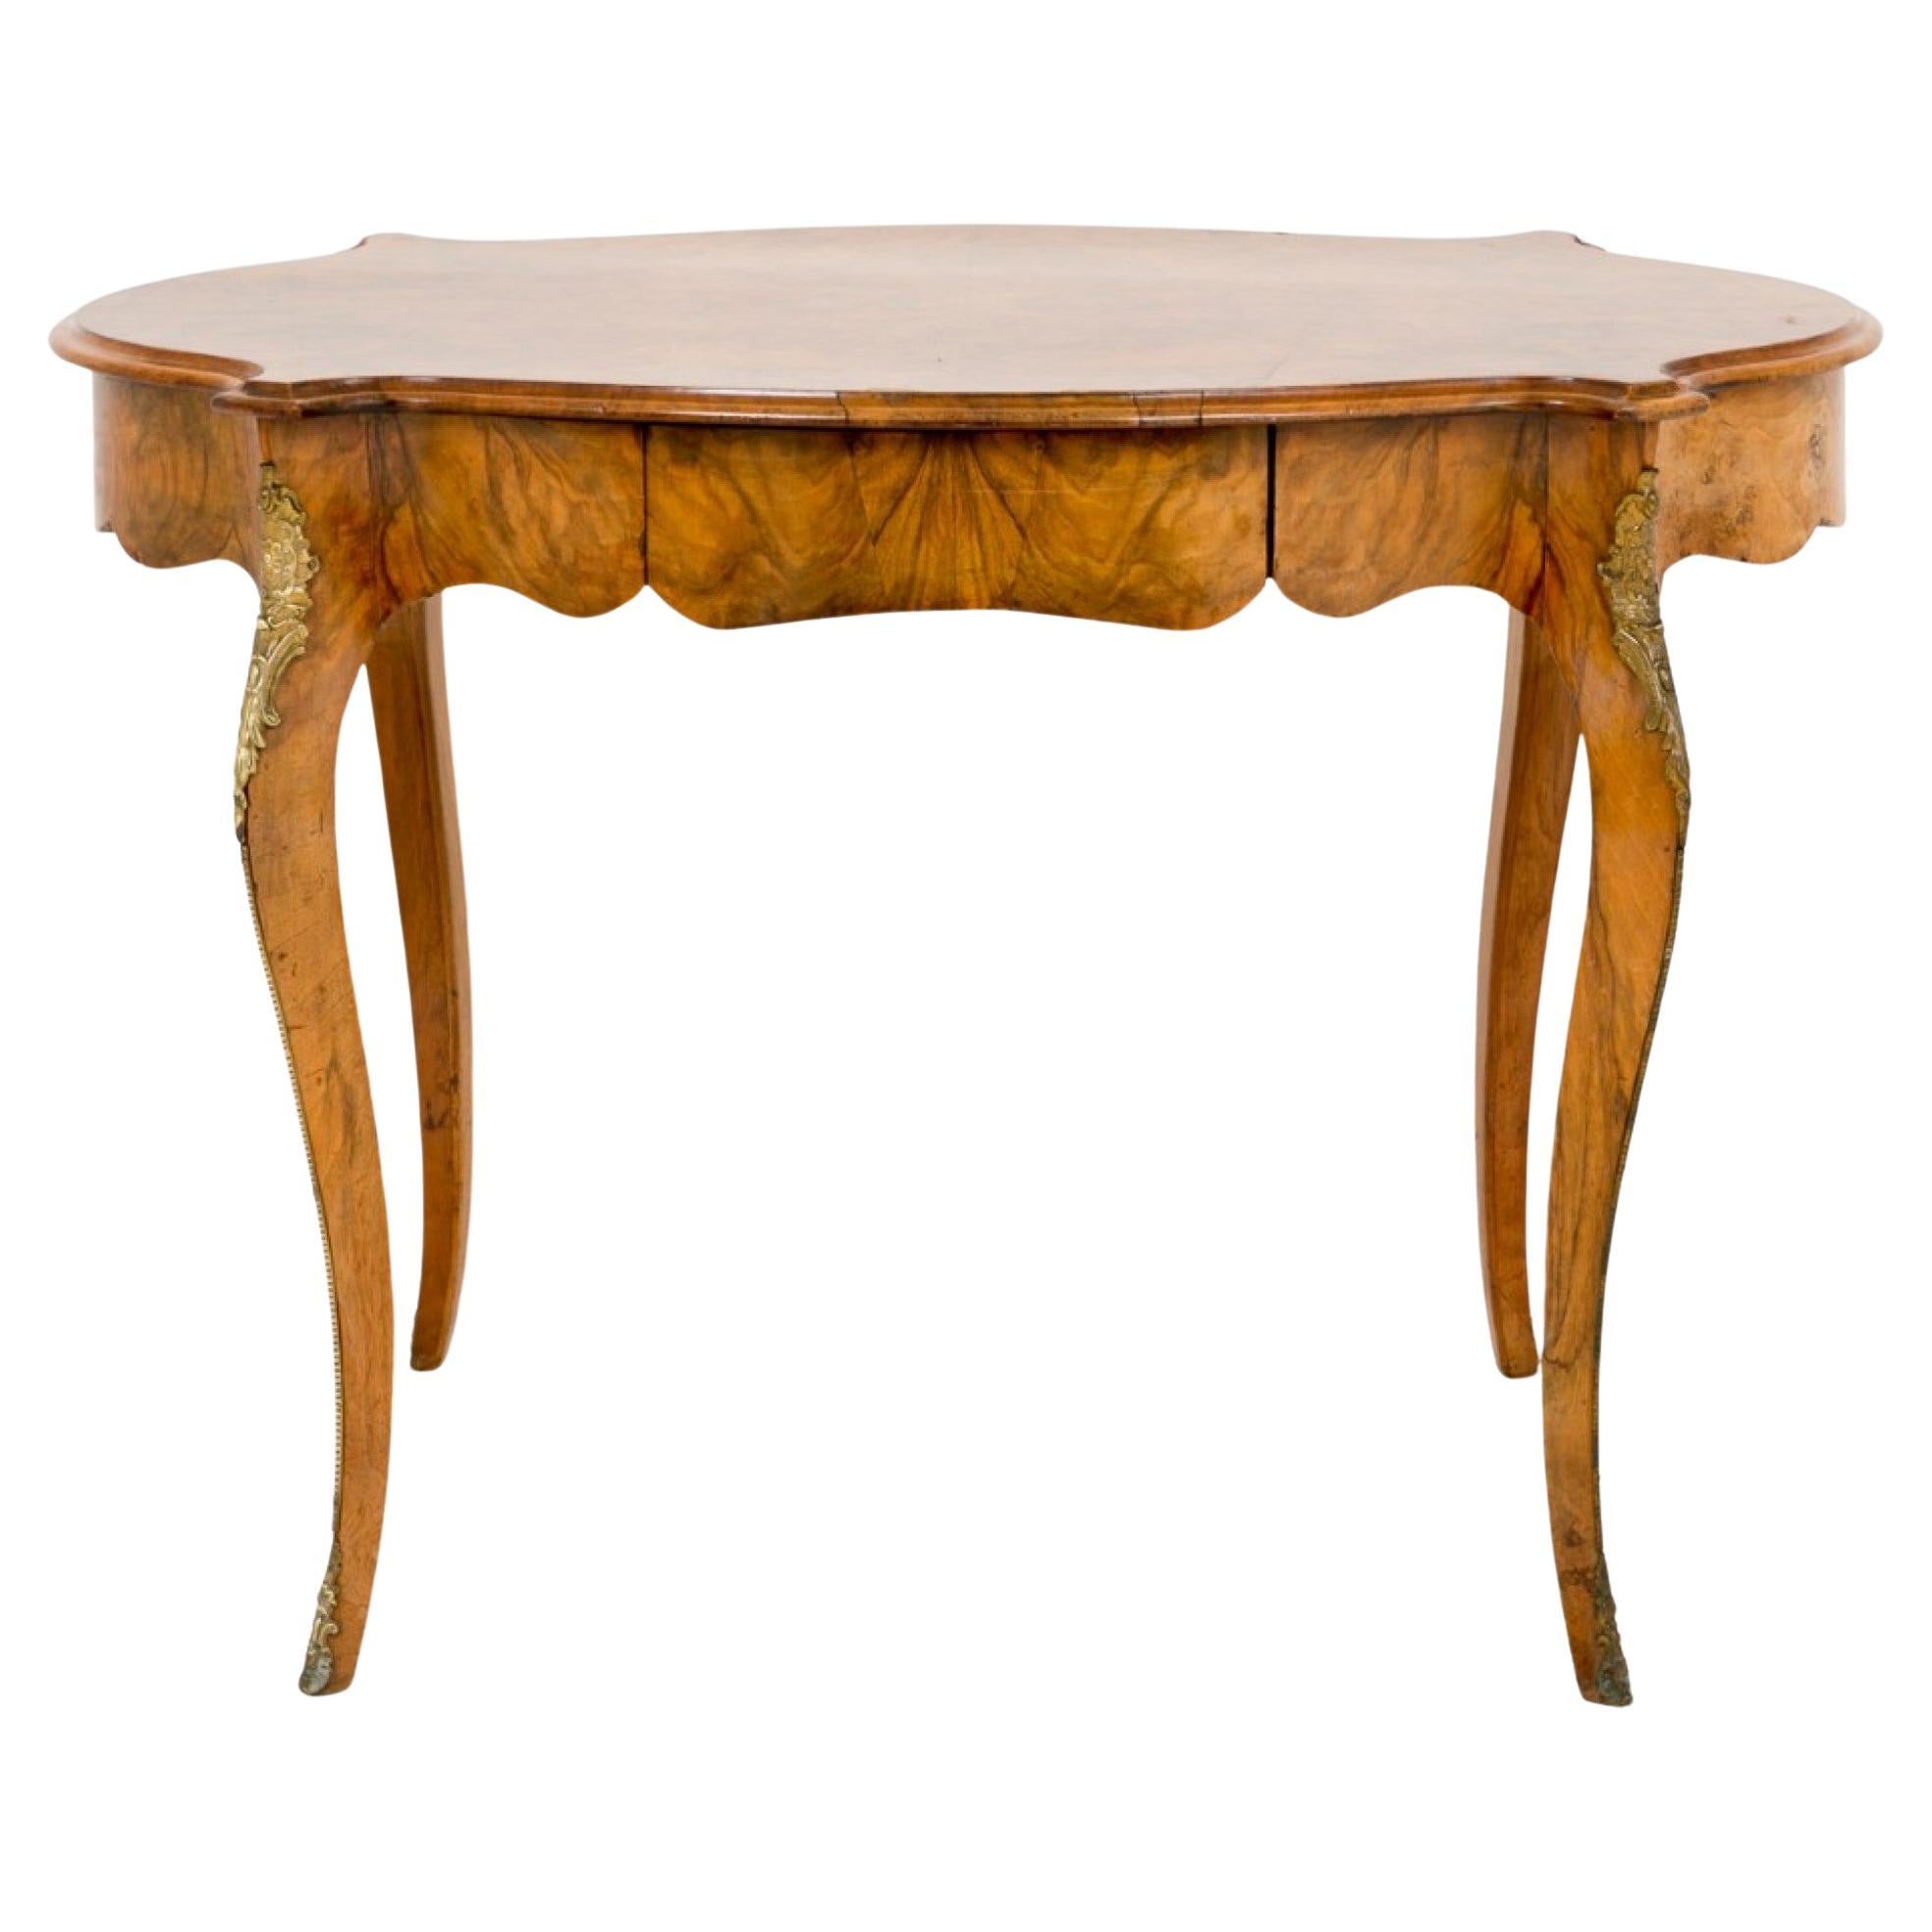 French Empire Centre Table Burr Walnut circa 1860 For Sale